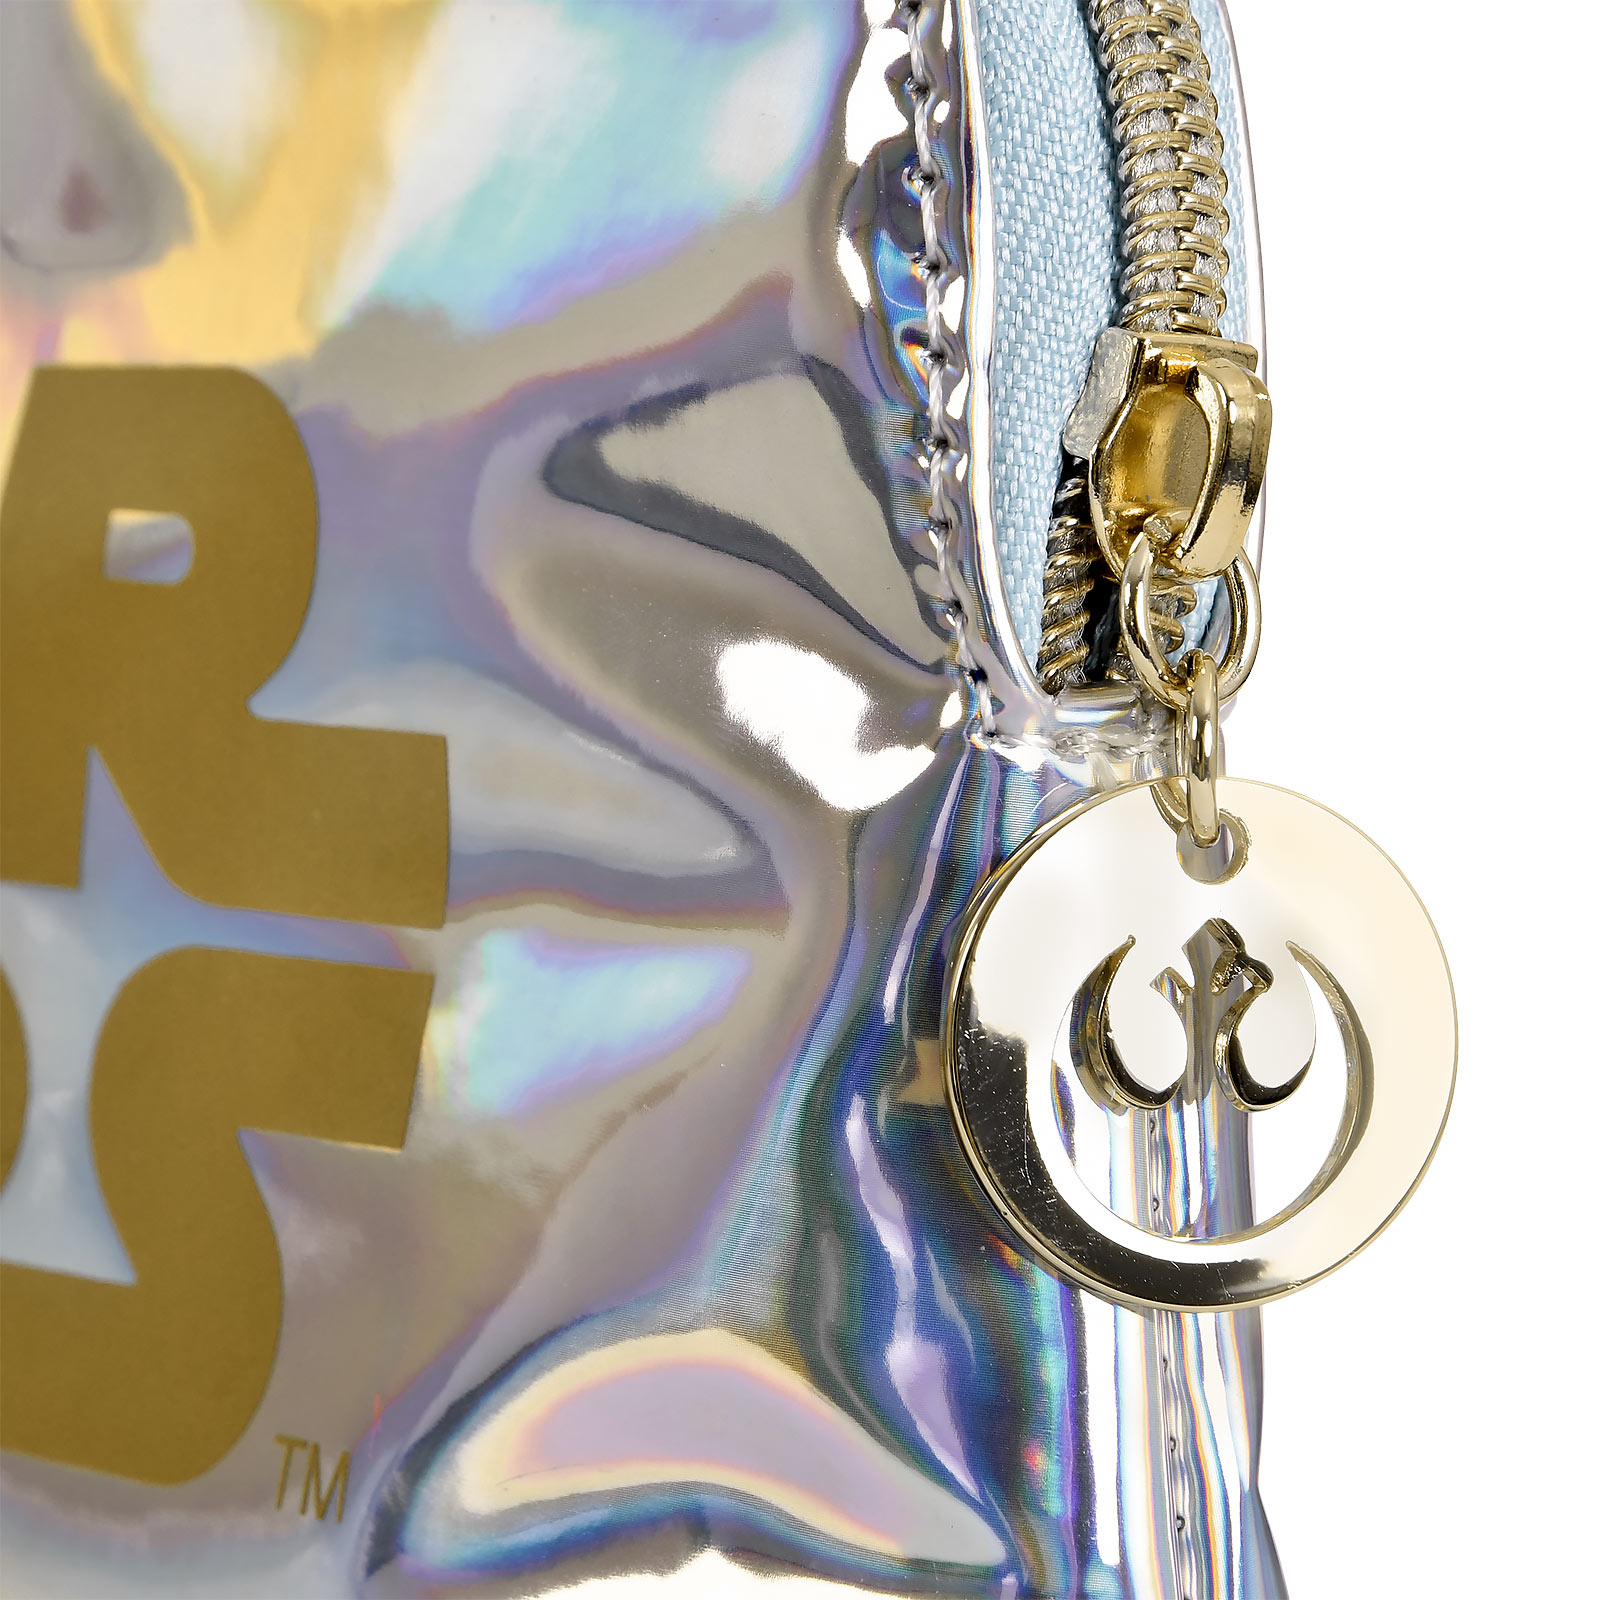 Star Wars - Leia Holo Cosmetic Bag